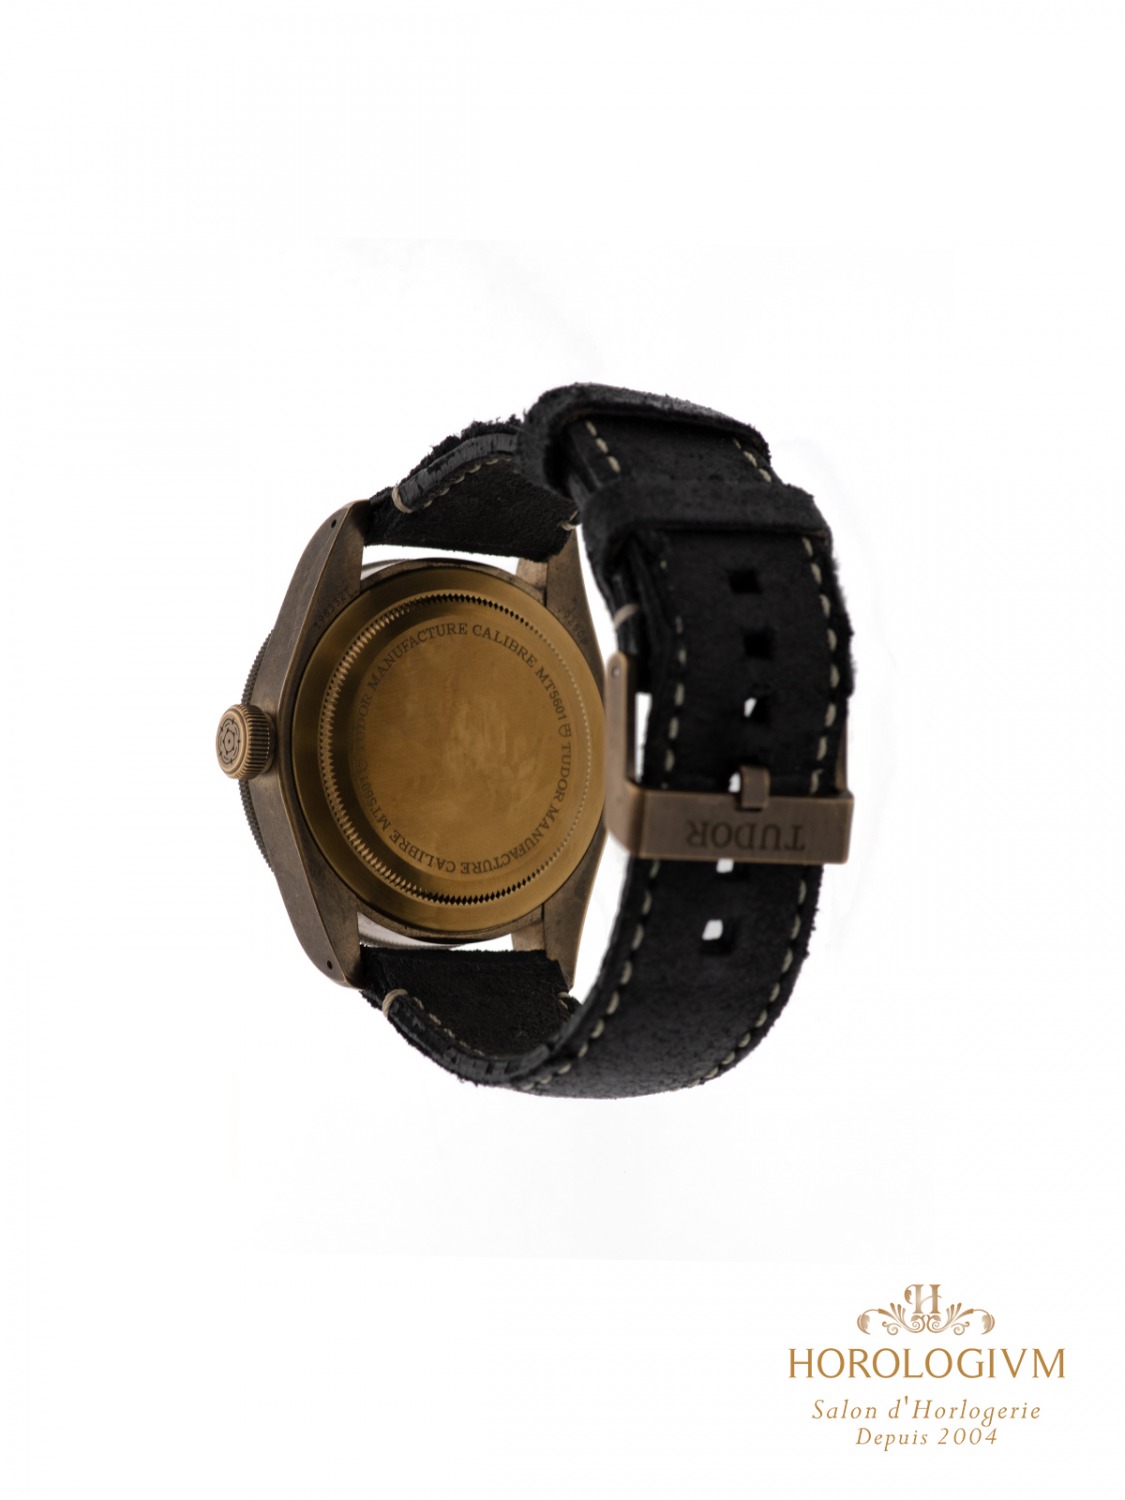 Tudor Black Bay Bronze REF. M79250BA watch, bronze